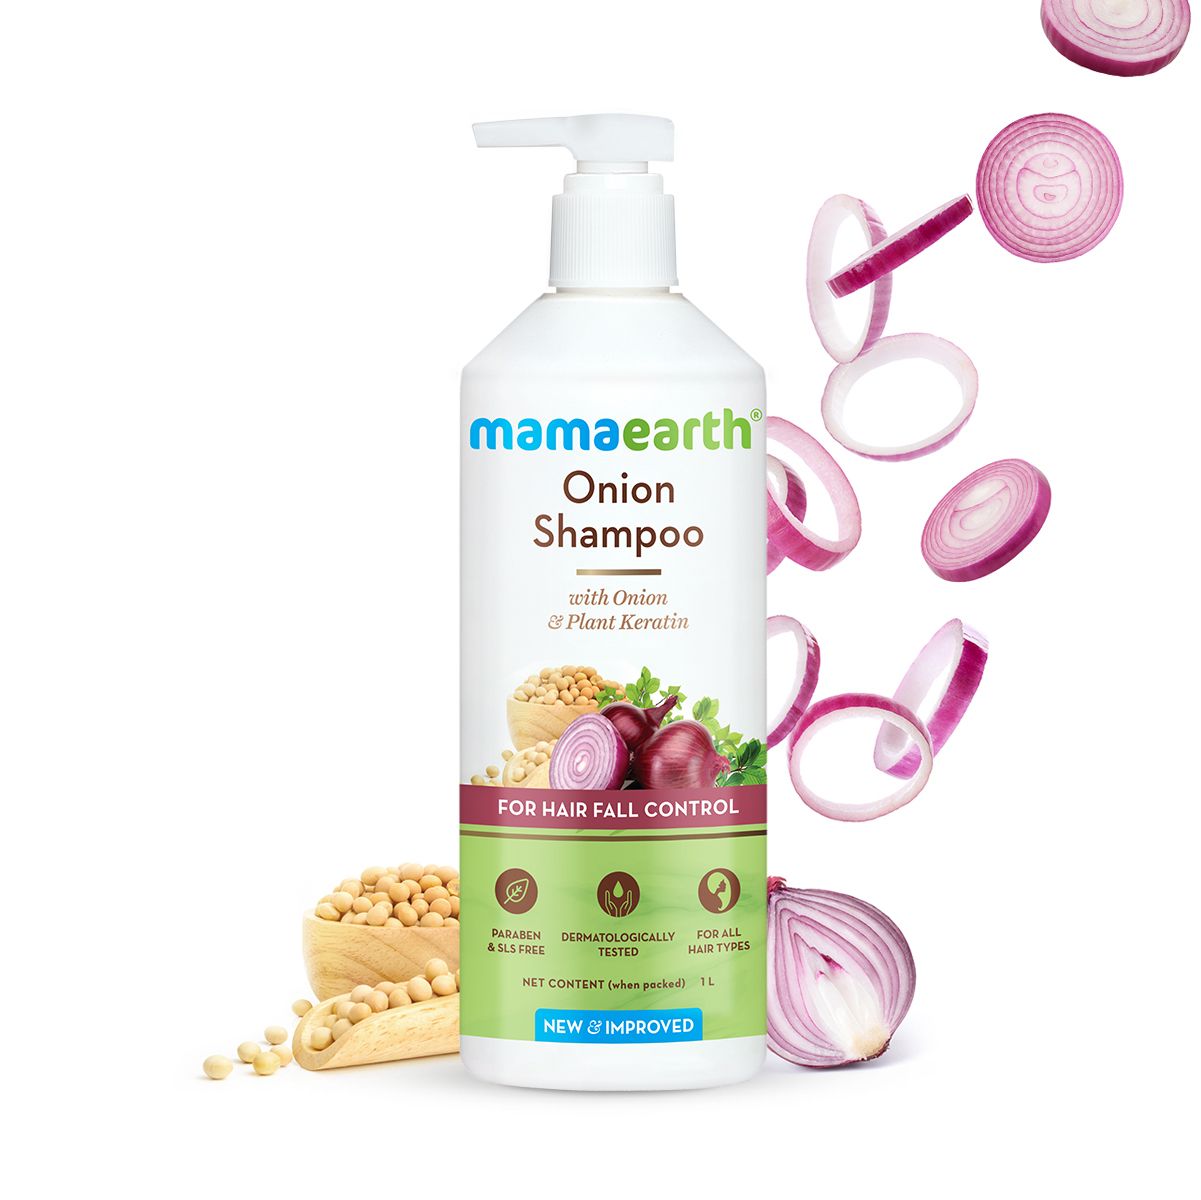 Mamaearth Onion Hair Fall Shampoo Review  Reduces Hairfall